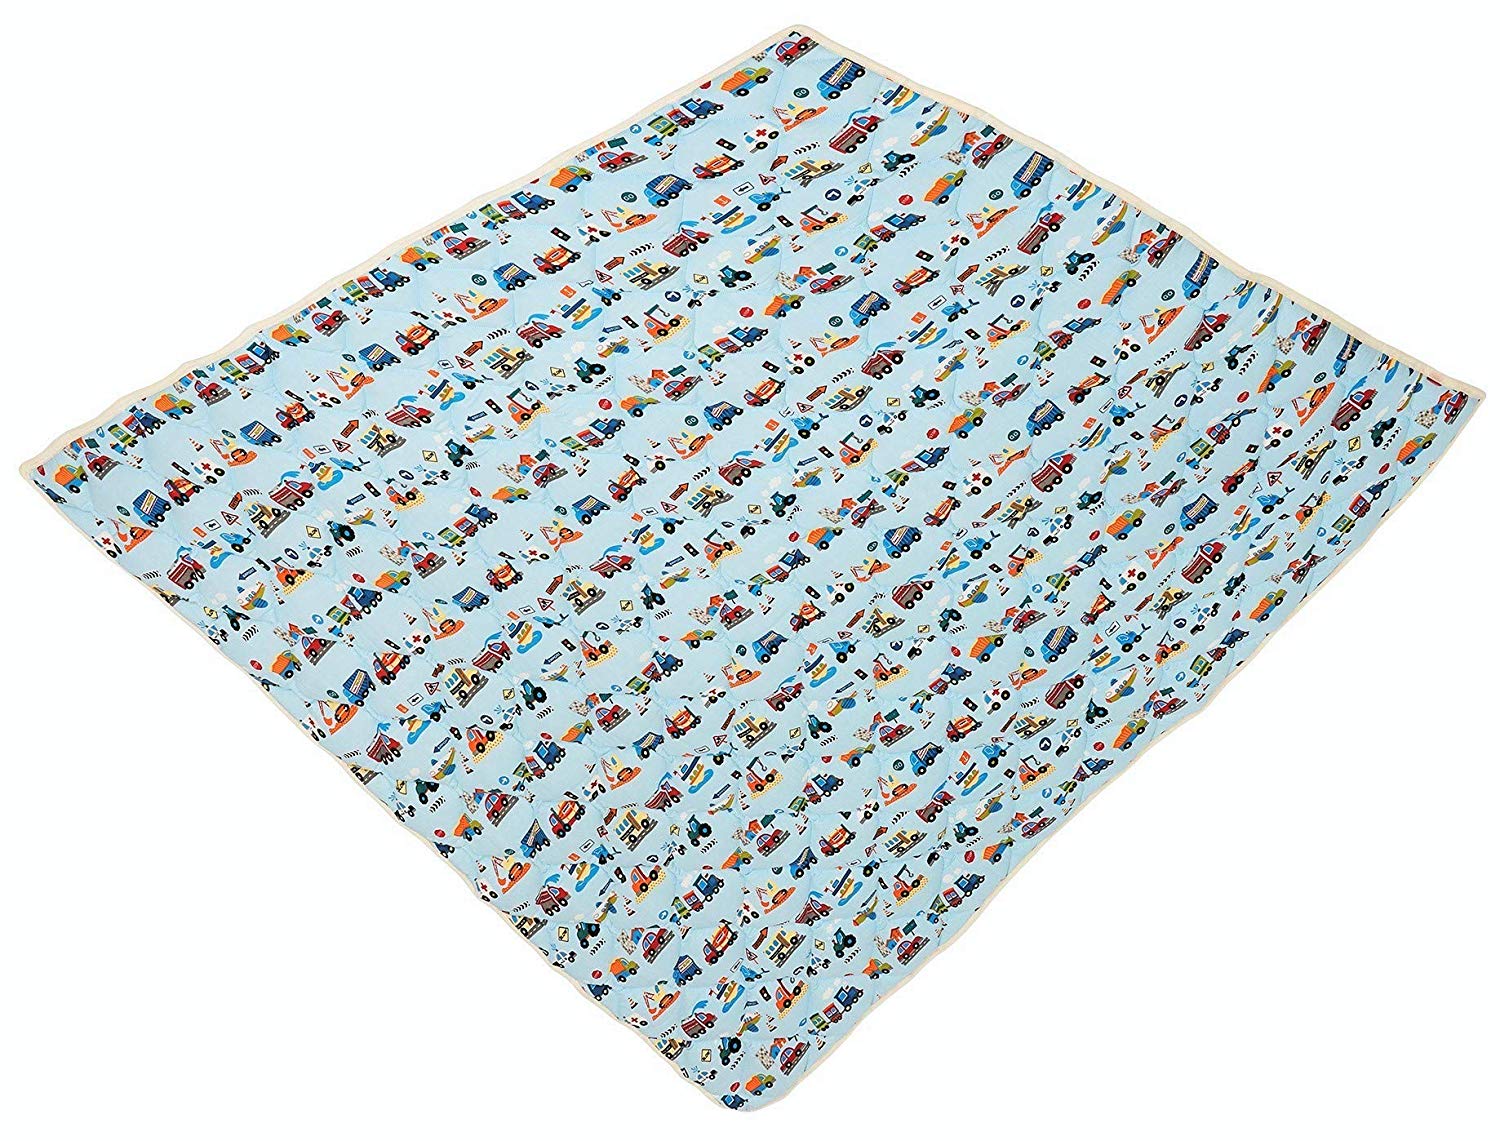 Ideenreich Ideenreich 2534 Baby Crawling Blanket for Crawling Dream Car 130 x 150 cm Ideal as Play Mat and Playpen Mat Blue